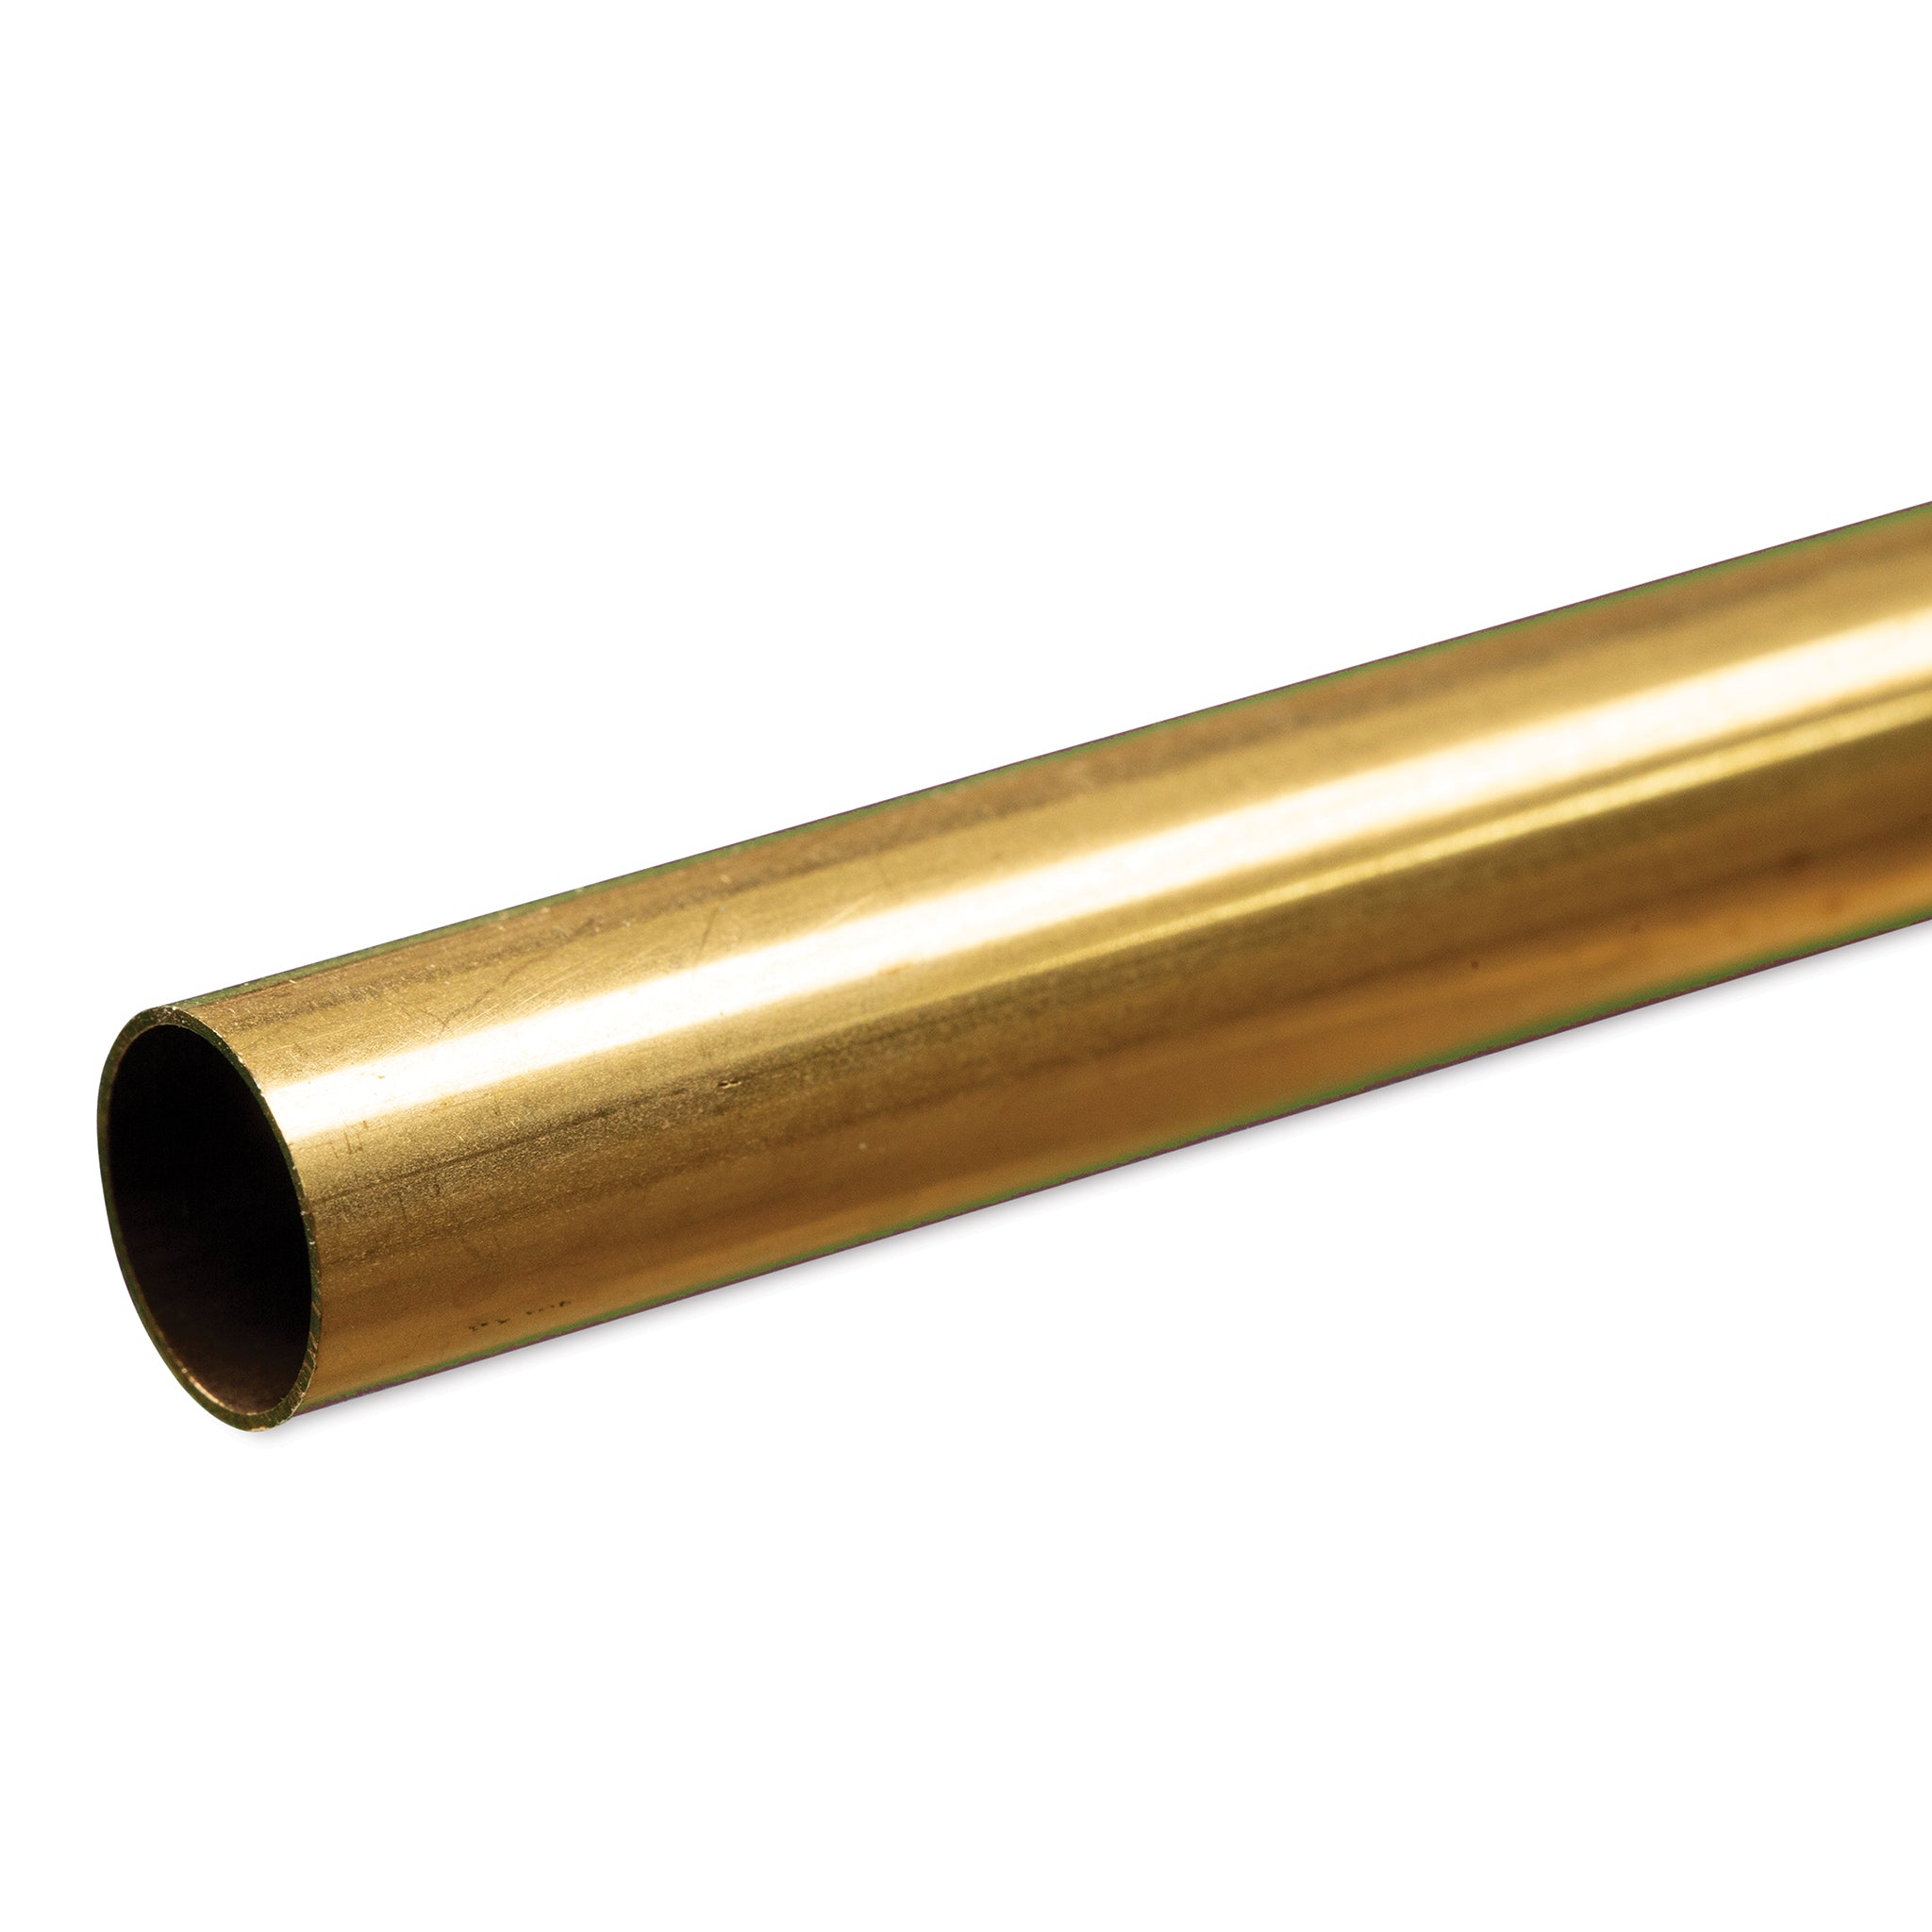 K&S Metals 8132 Round Brass Tube 9/32" OD x 0.014" Wall x 12" Long (1 Piece)